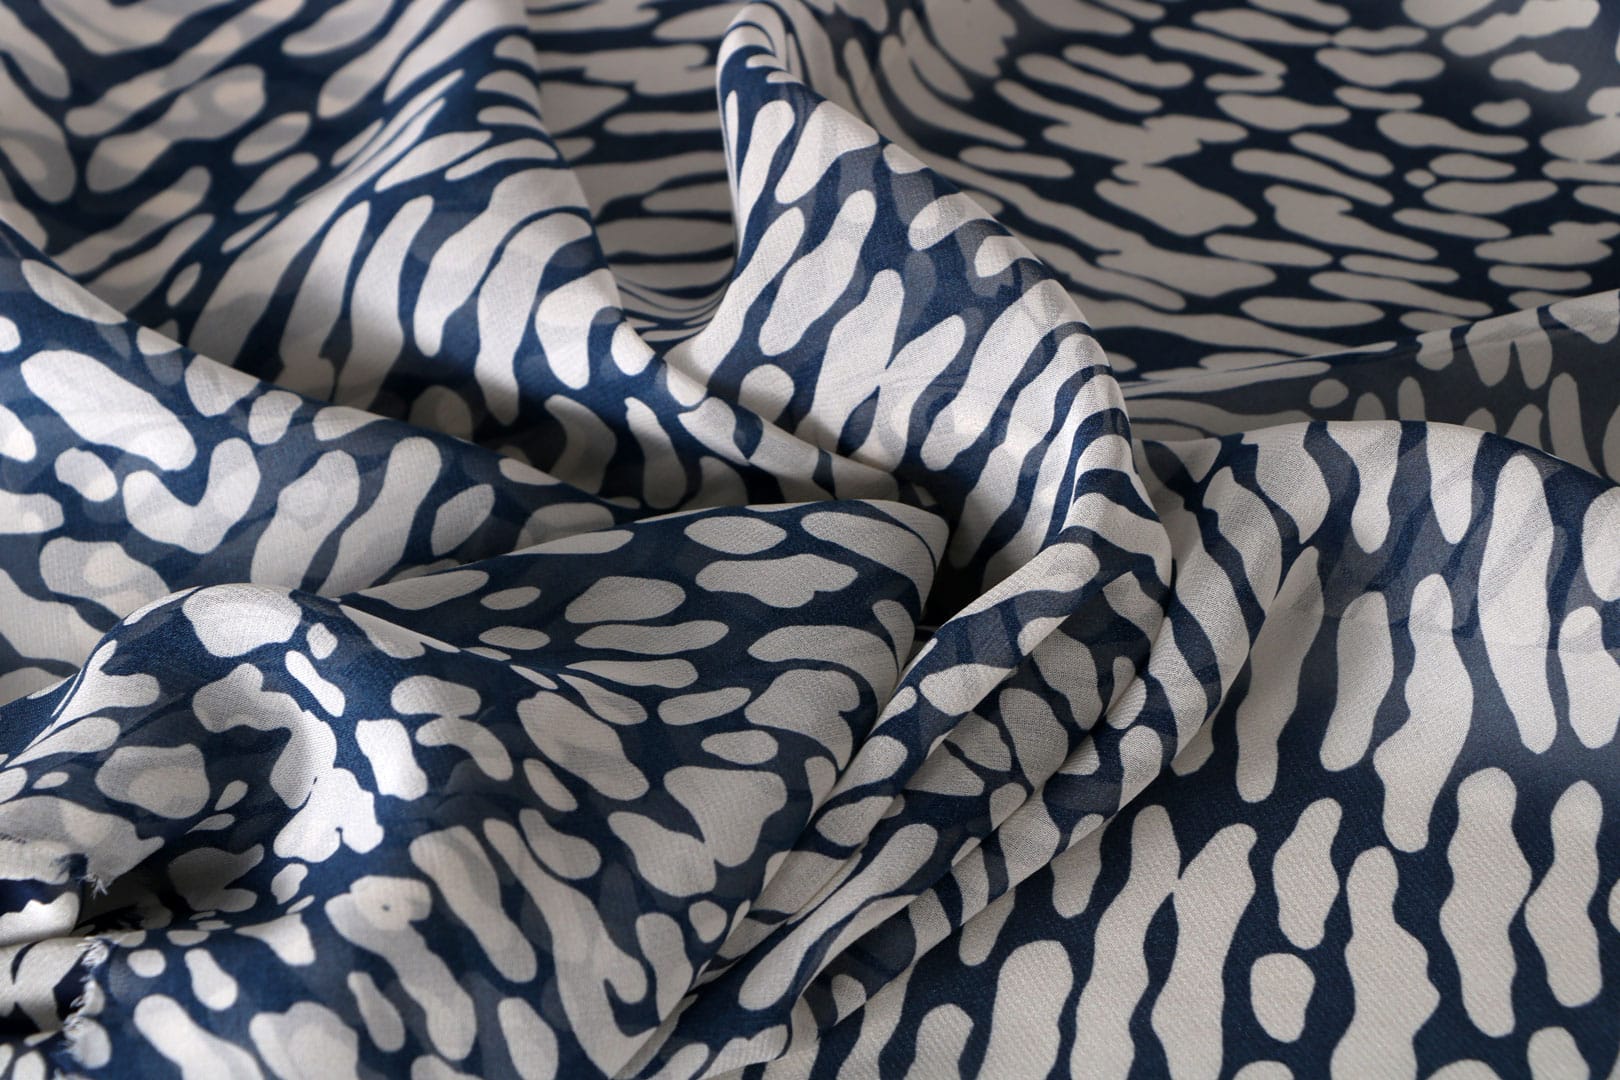 Blue, White Silk Georgette fabric for dressmaking